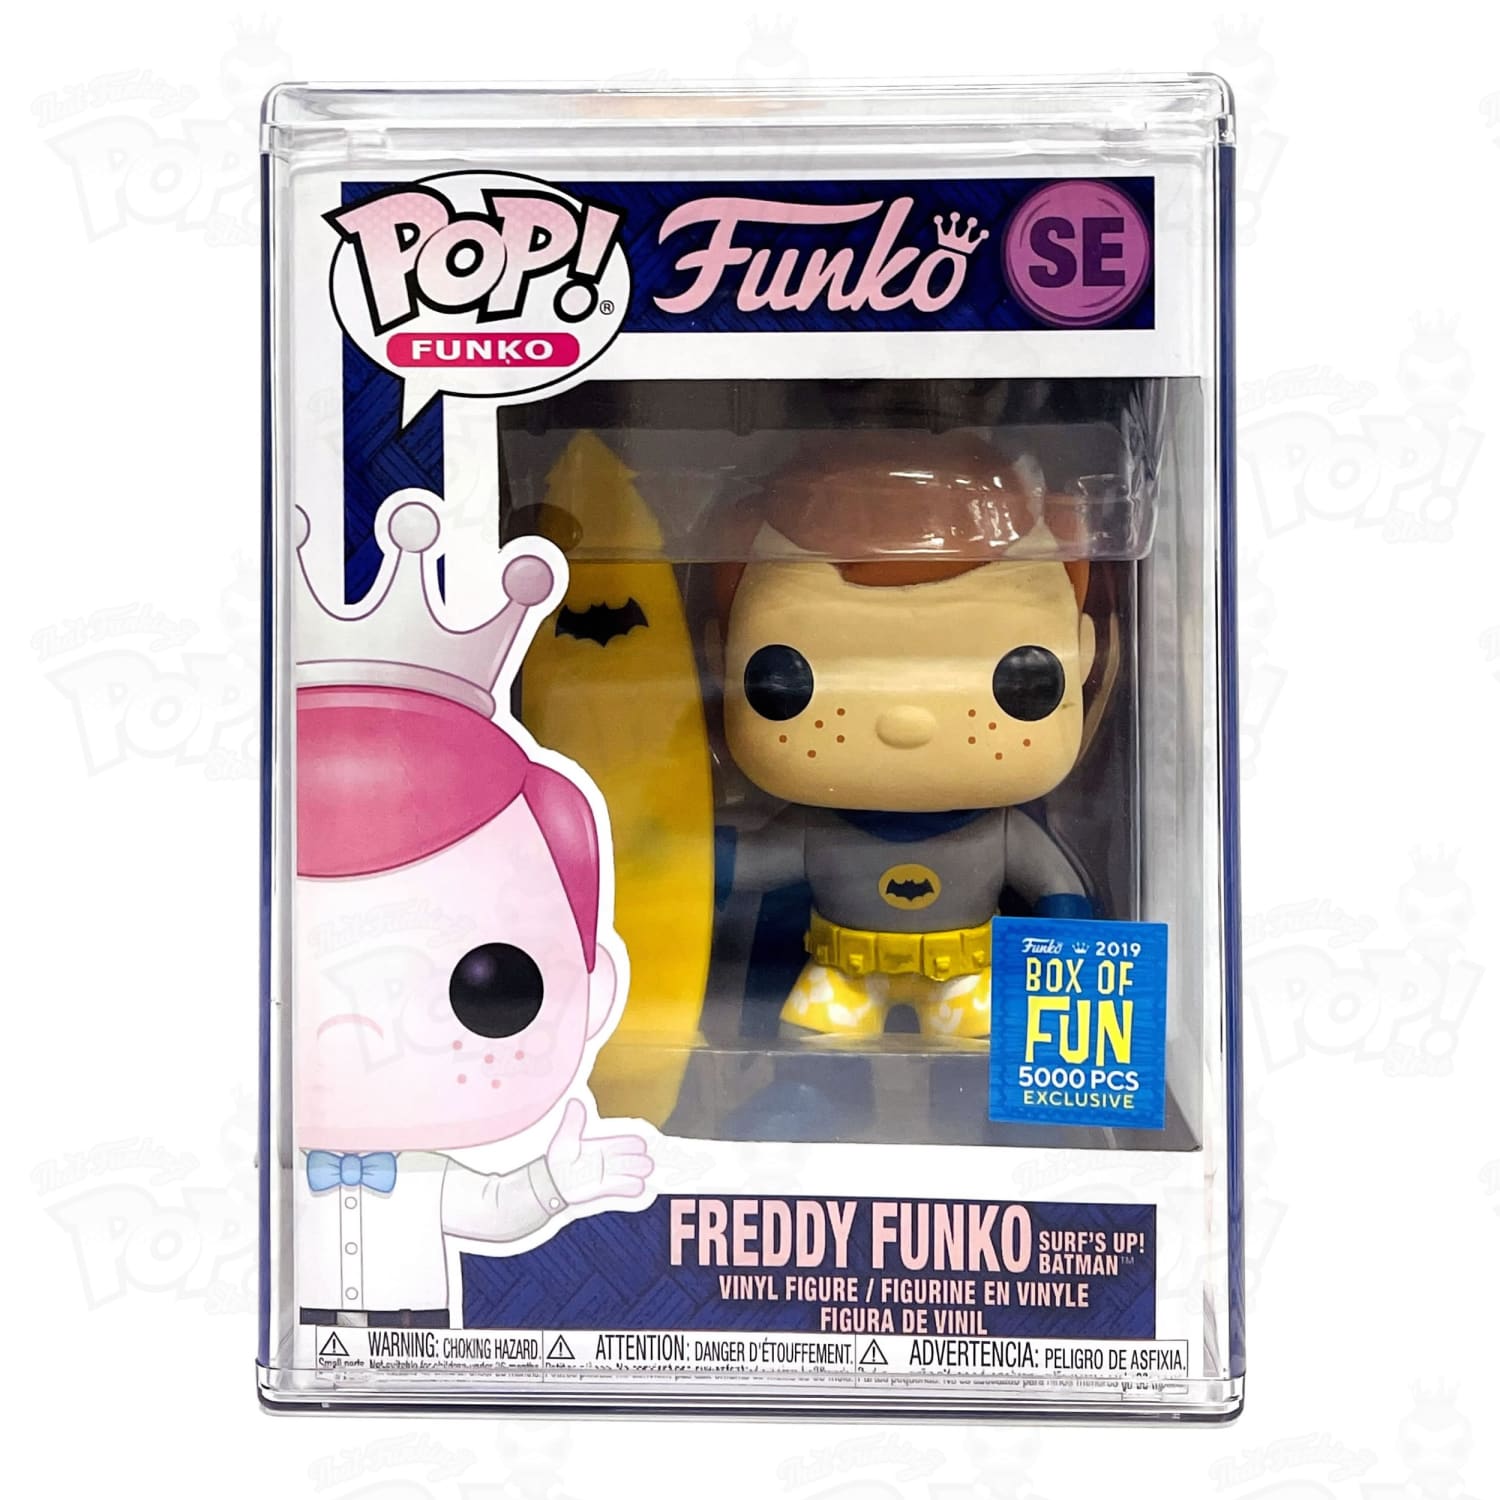 Funko - Soccer Freddy - POP! Funko action figure SE